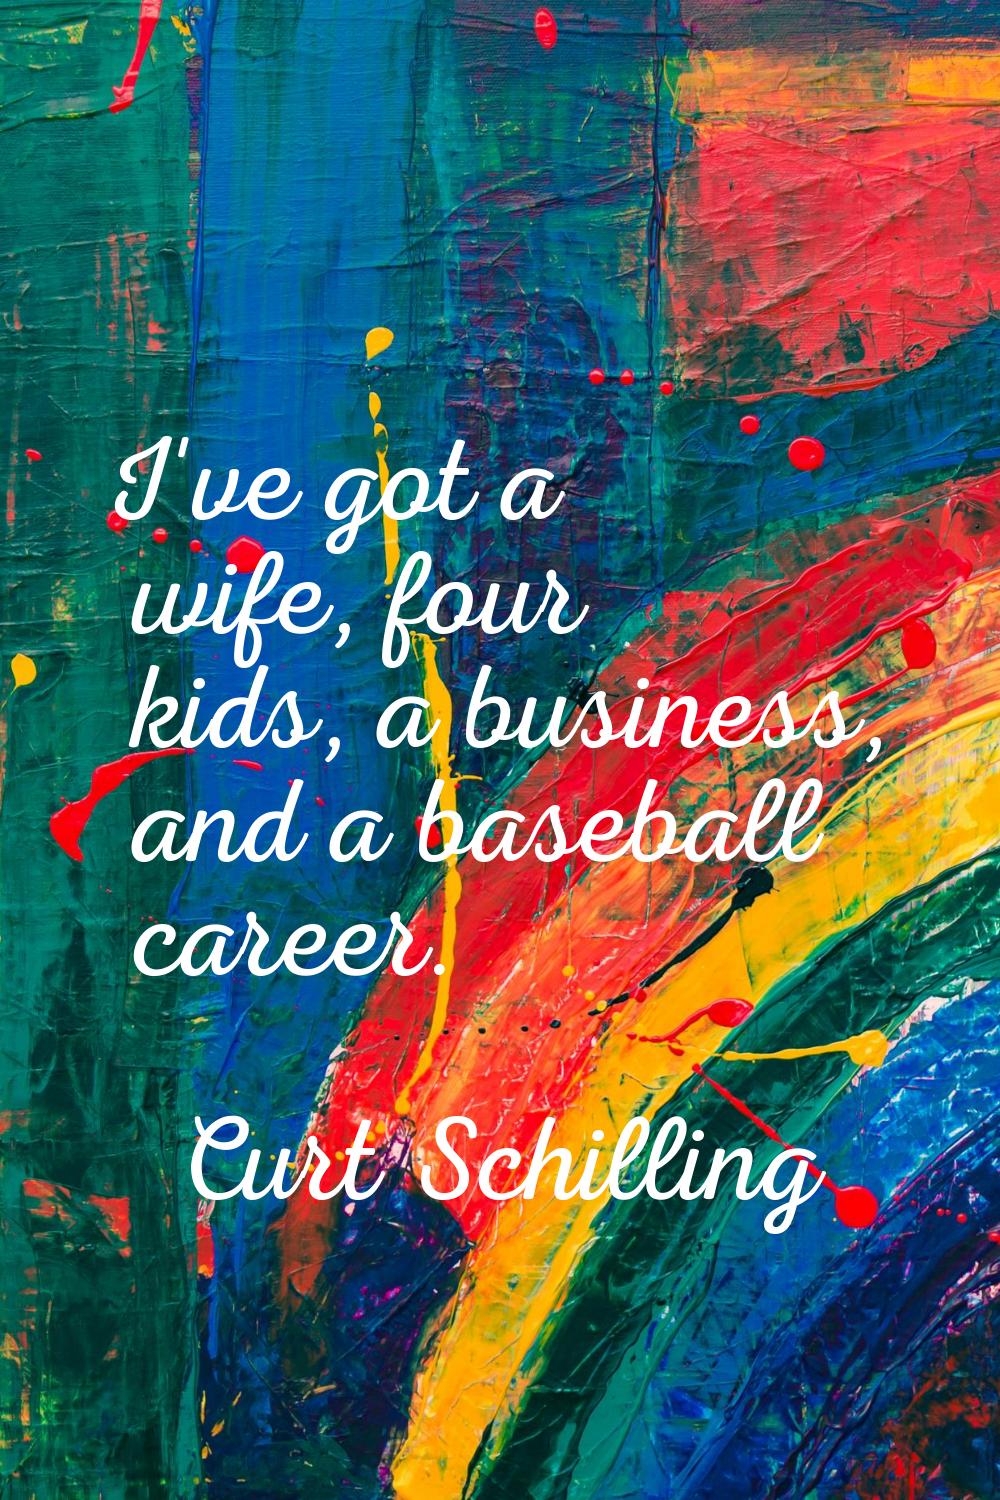 I've got a wife, four kids, a business, and a baseball career.